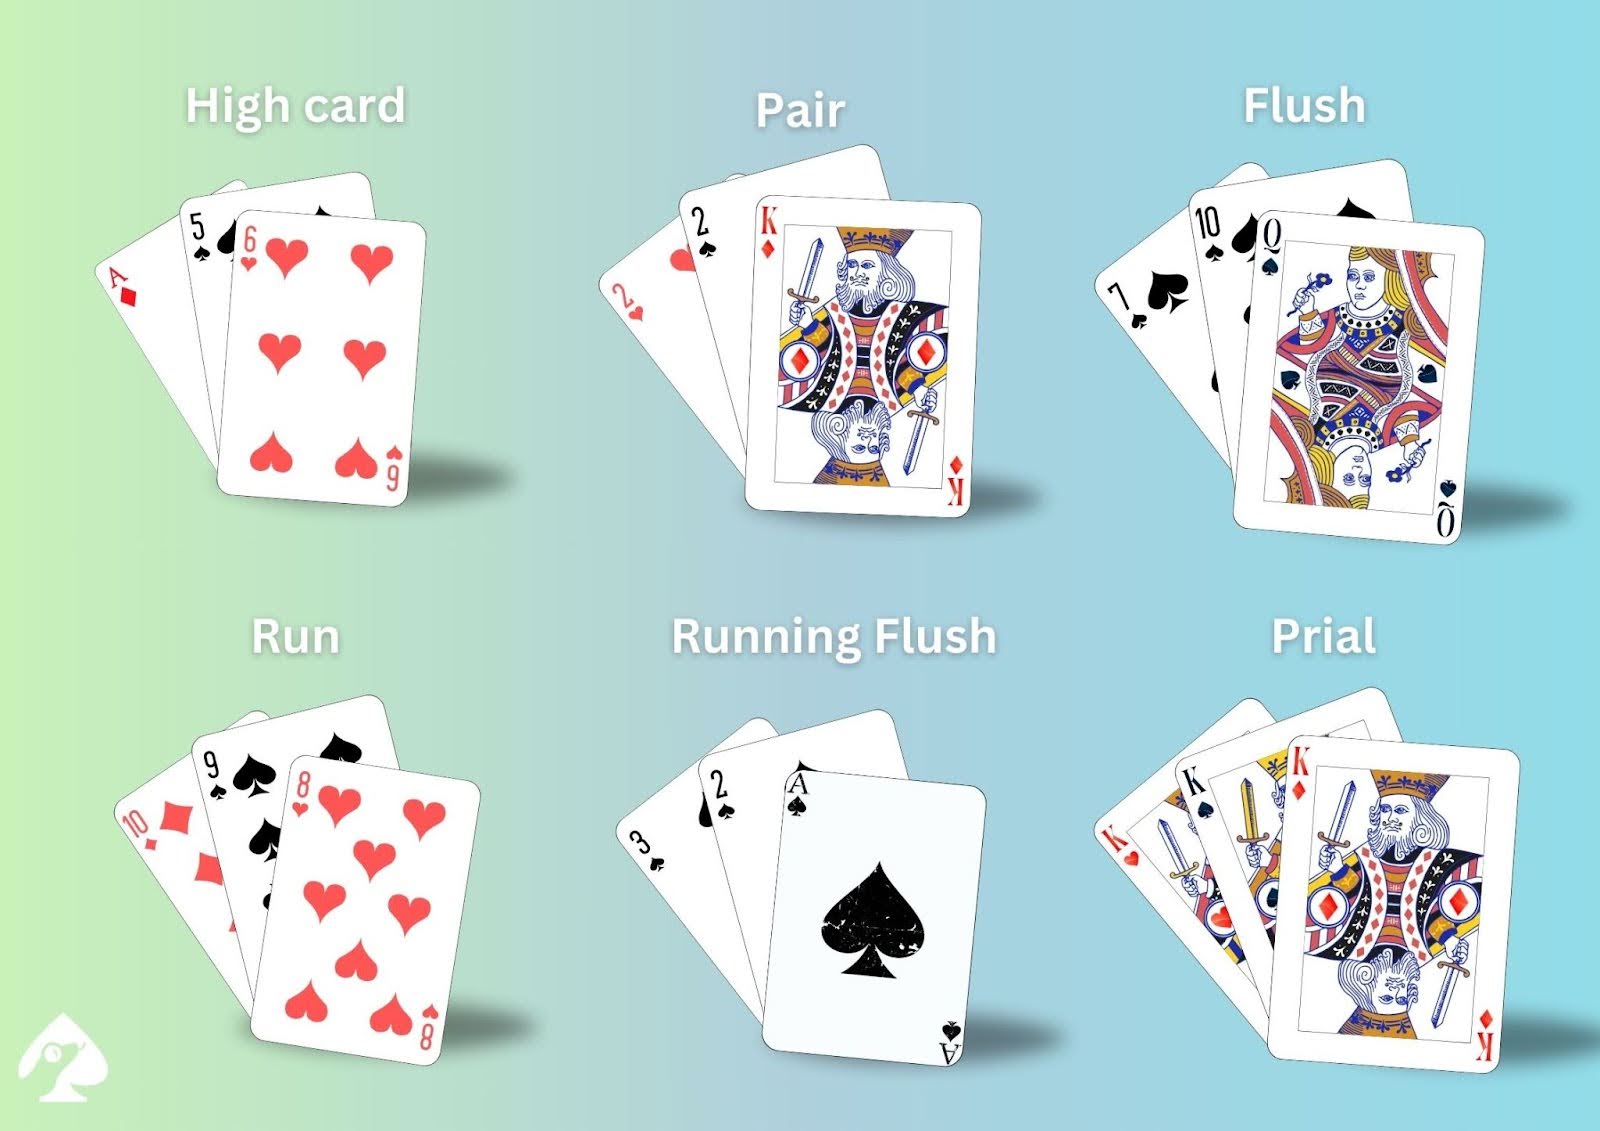 Three-card brag hand ranks